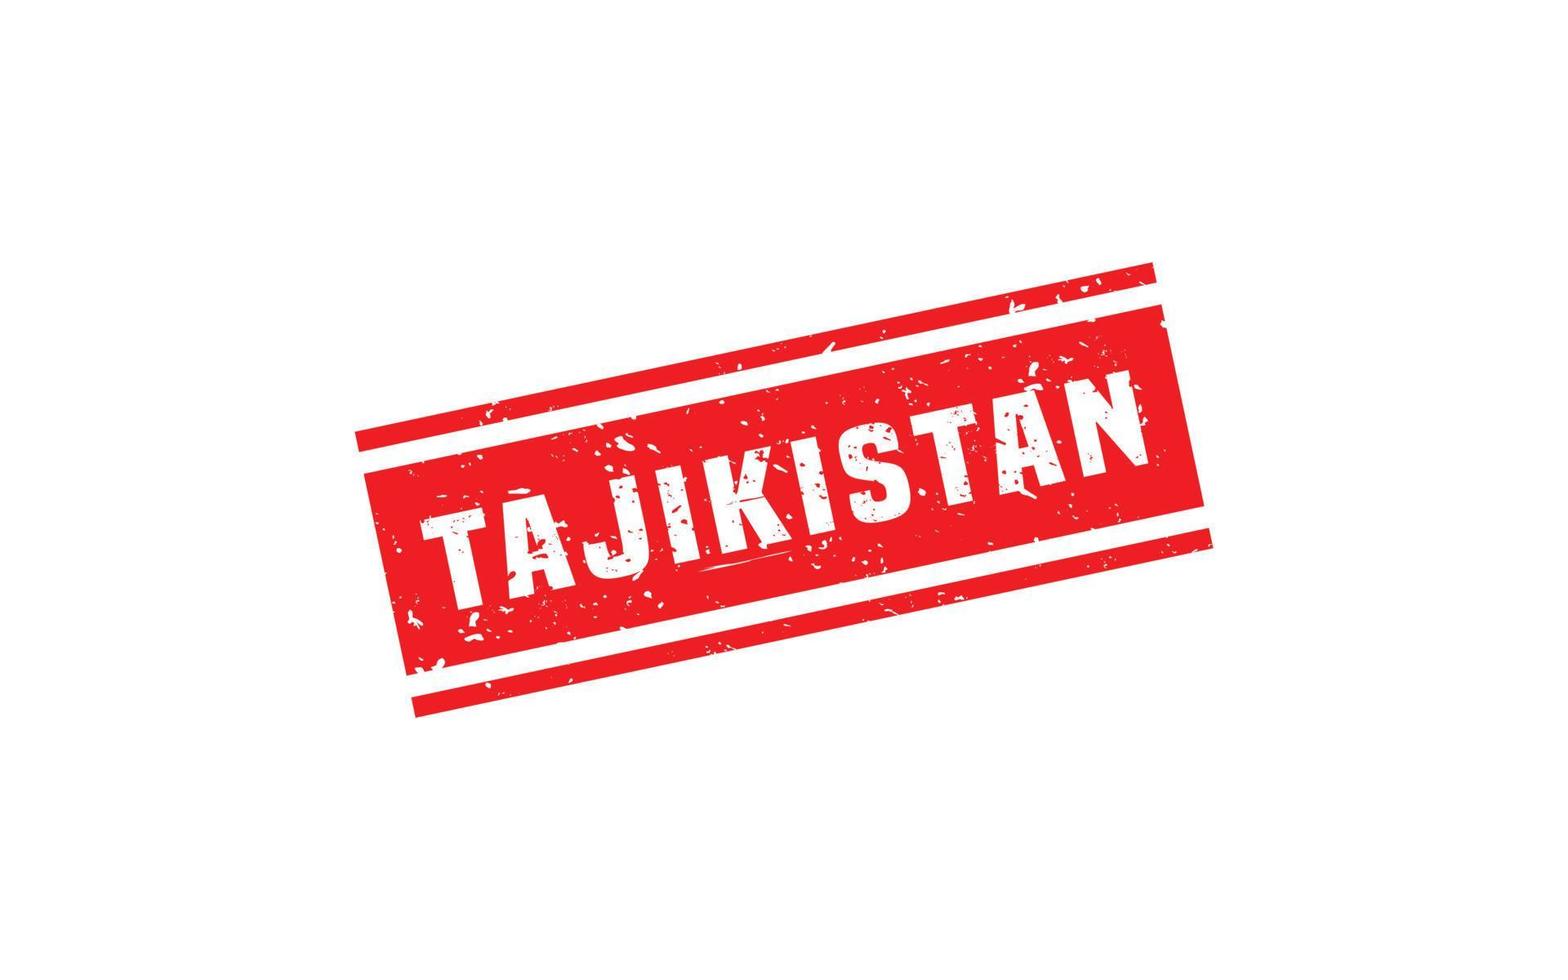 tajiquistão carimbo borracha com grunge estilo em branco fundo vetor